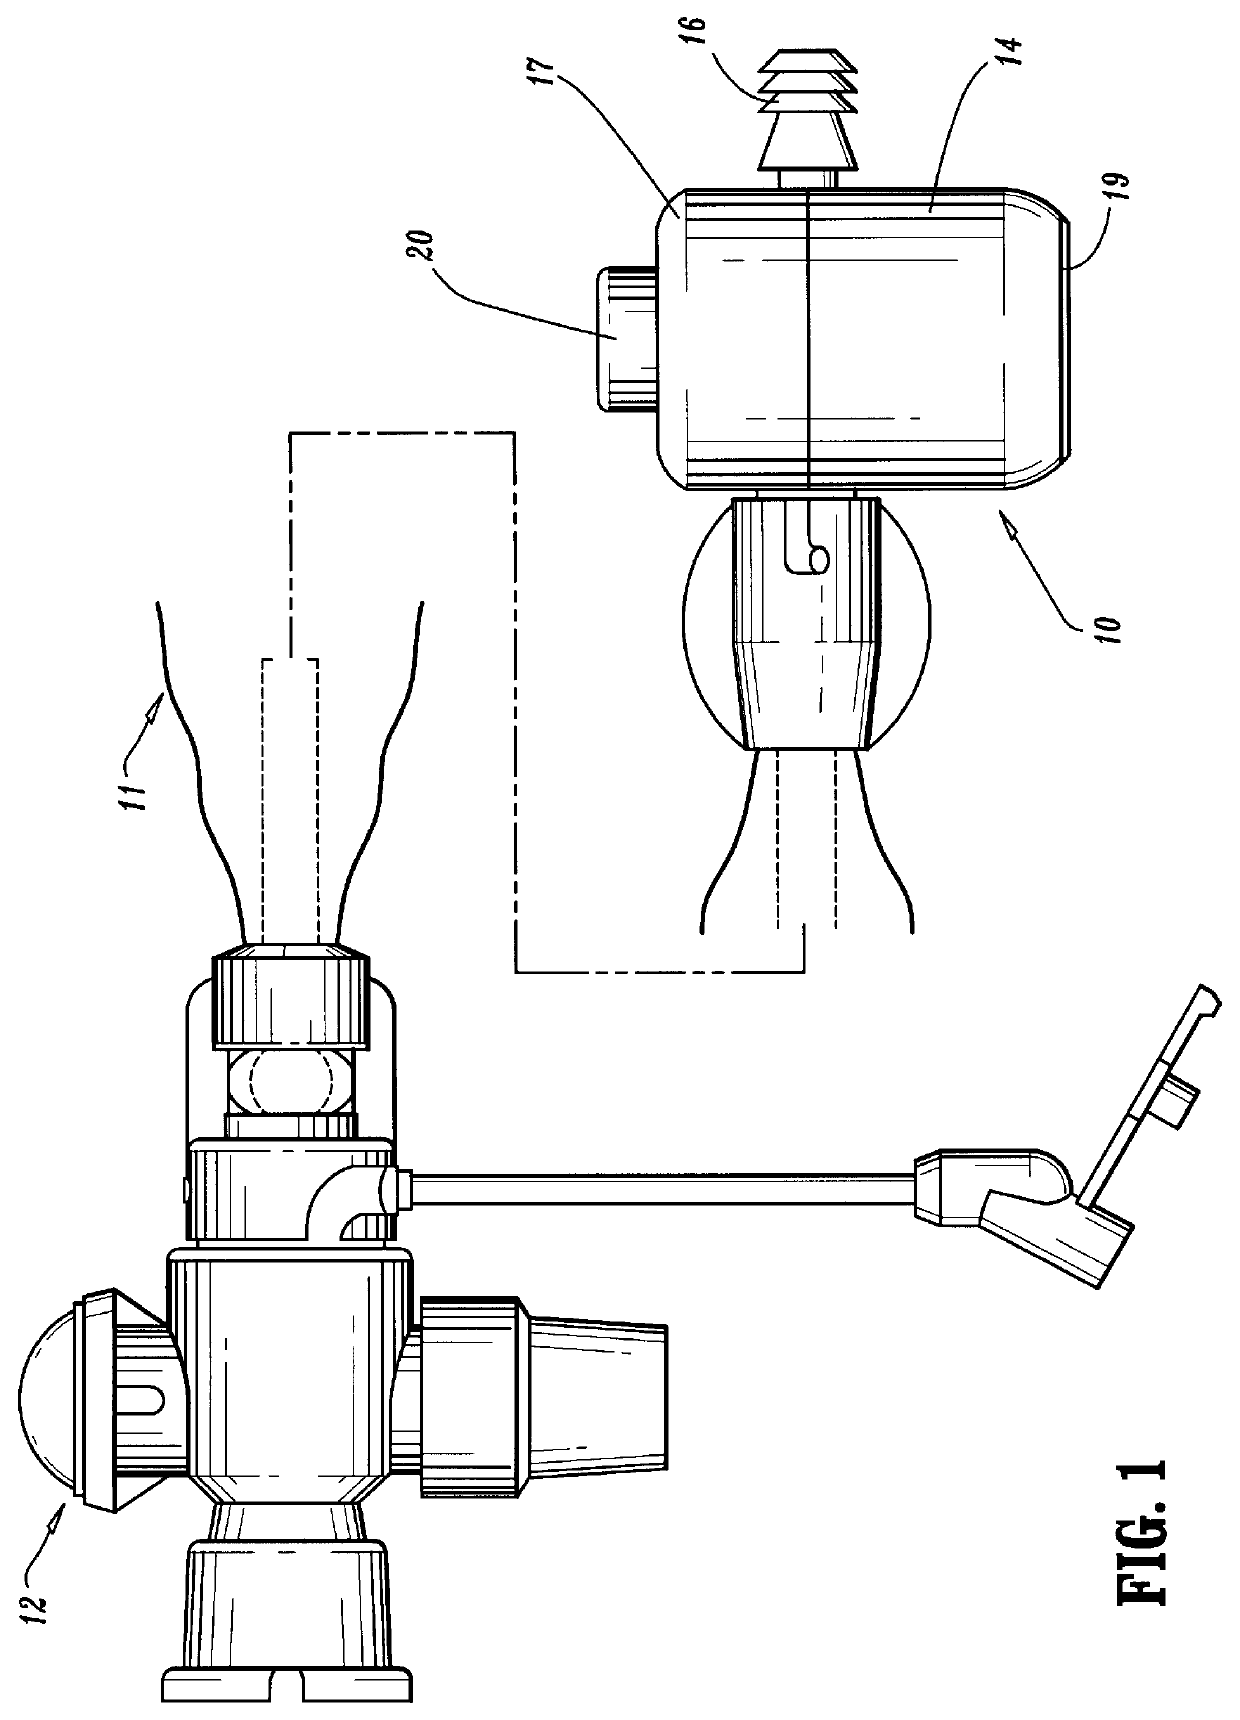 Suction control valve